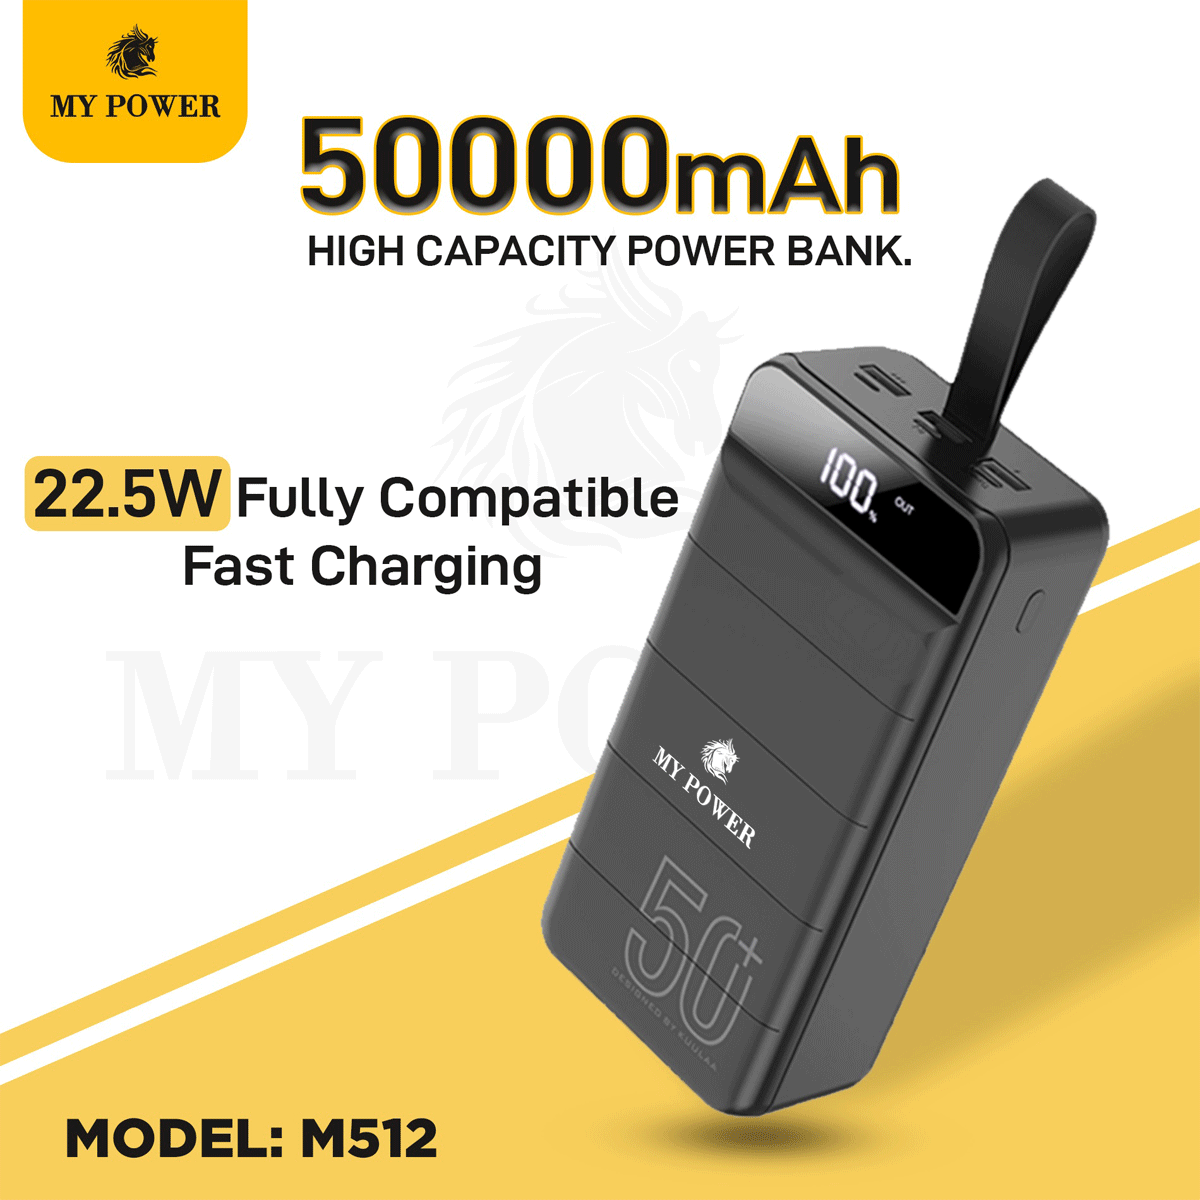 My Power Powerbank 50000mah M512, Mypower QC 3.0 PD 22.5W Fast Charging Power  Bank – OM PATHIVARA TRADING